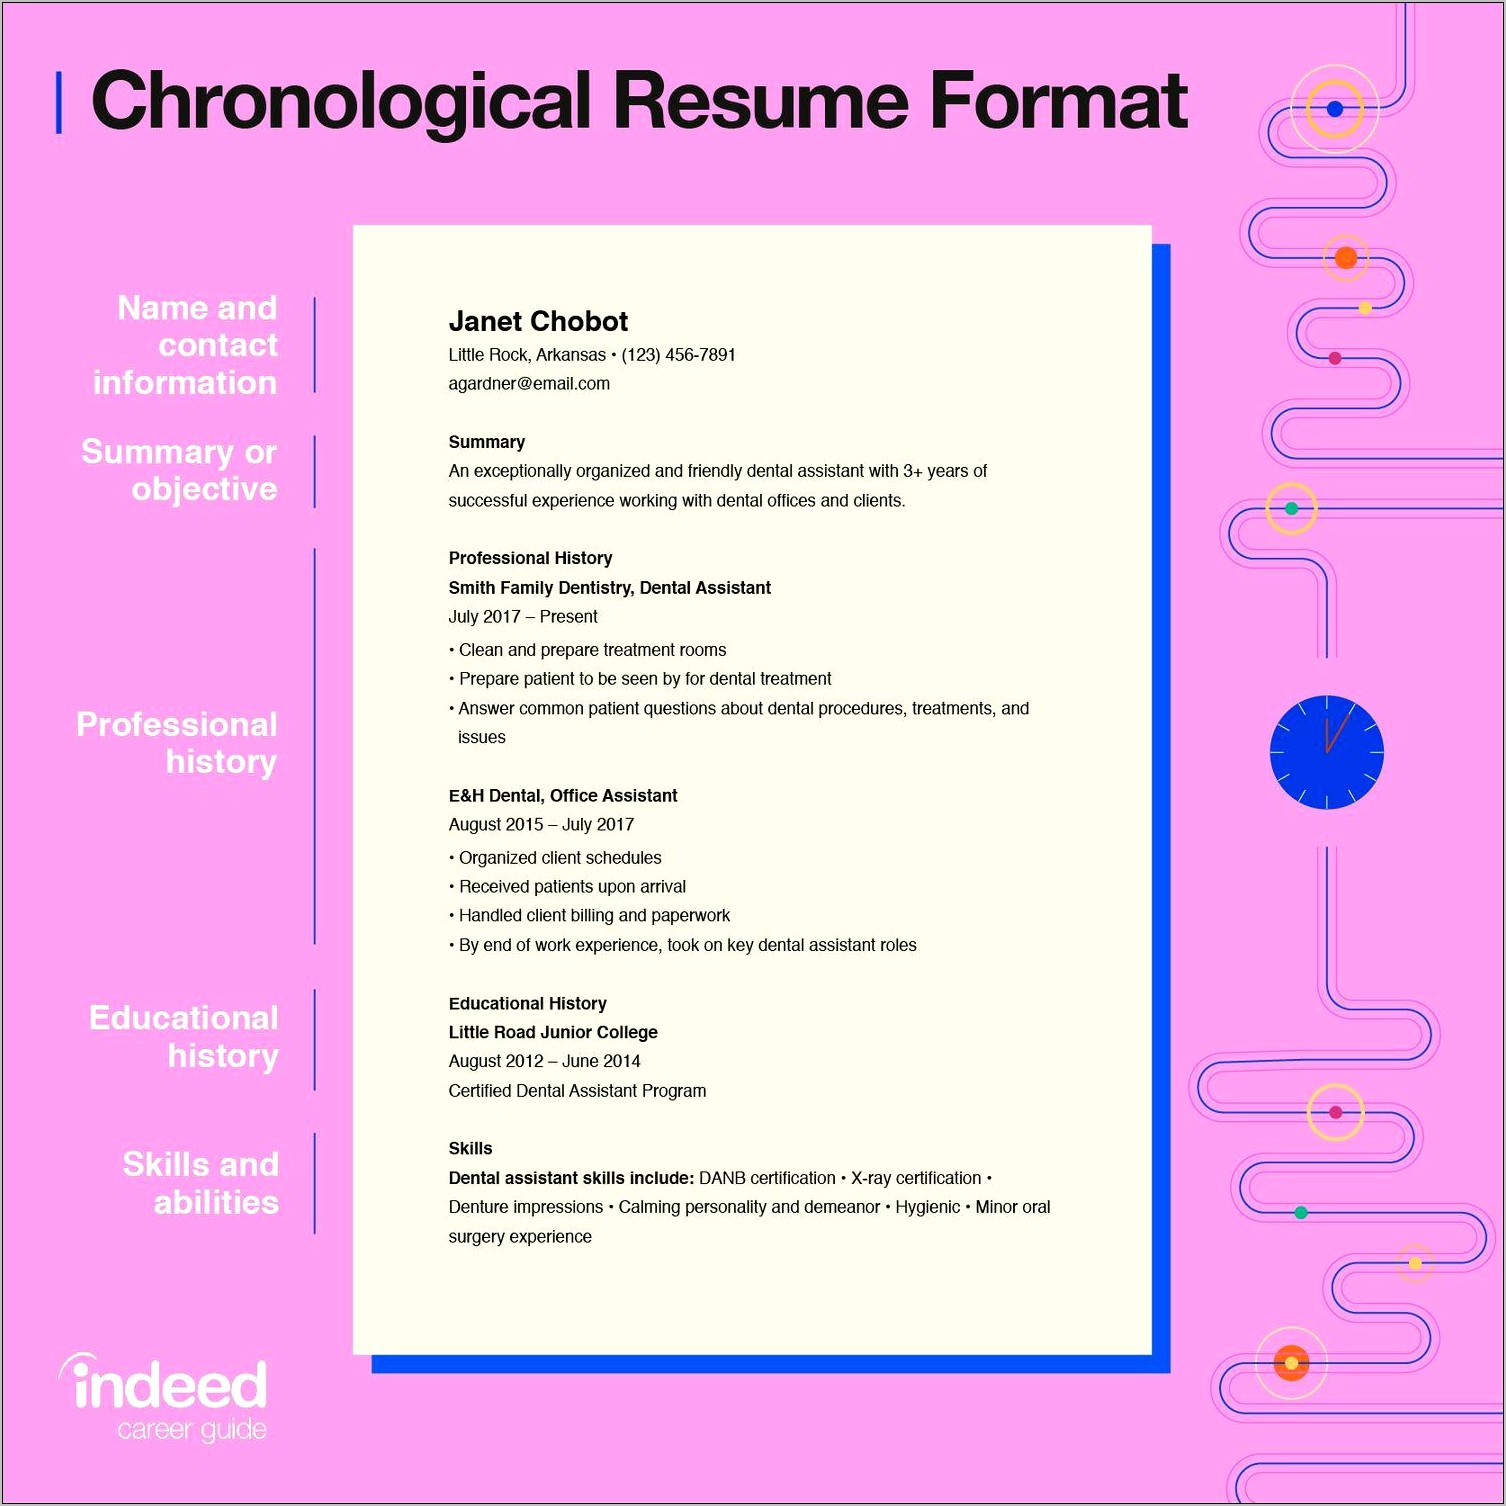 Brief Description Of Resume Sample